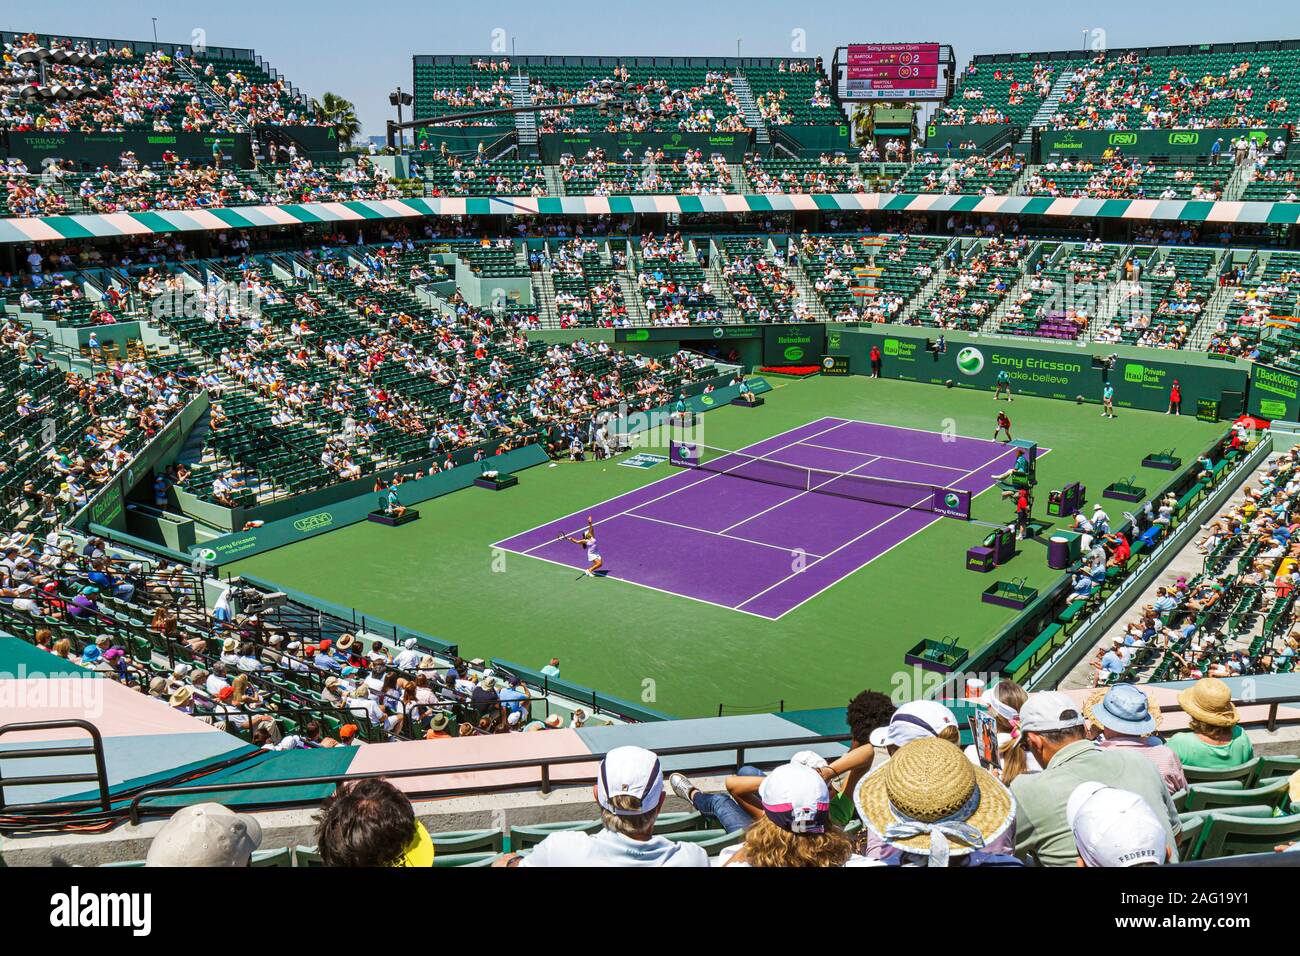 Miami Florida,Key Biscayne,Sony Ericsson Openal tennis tournament,sporting stadium,half full empty,fans,Venus Williams,FL100405028 Stock Photo